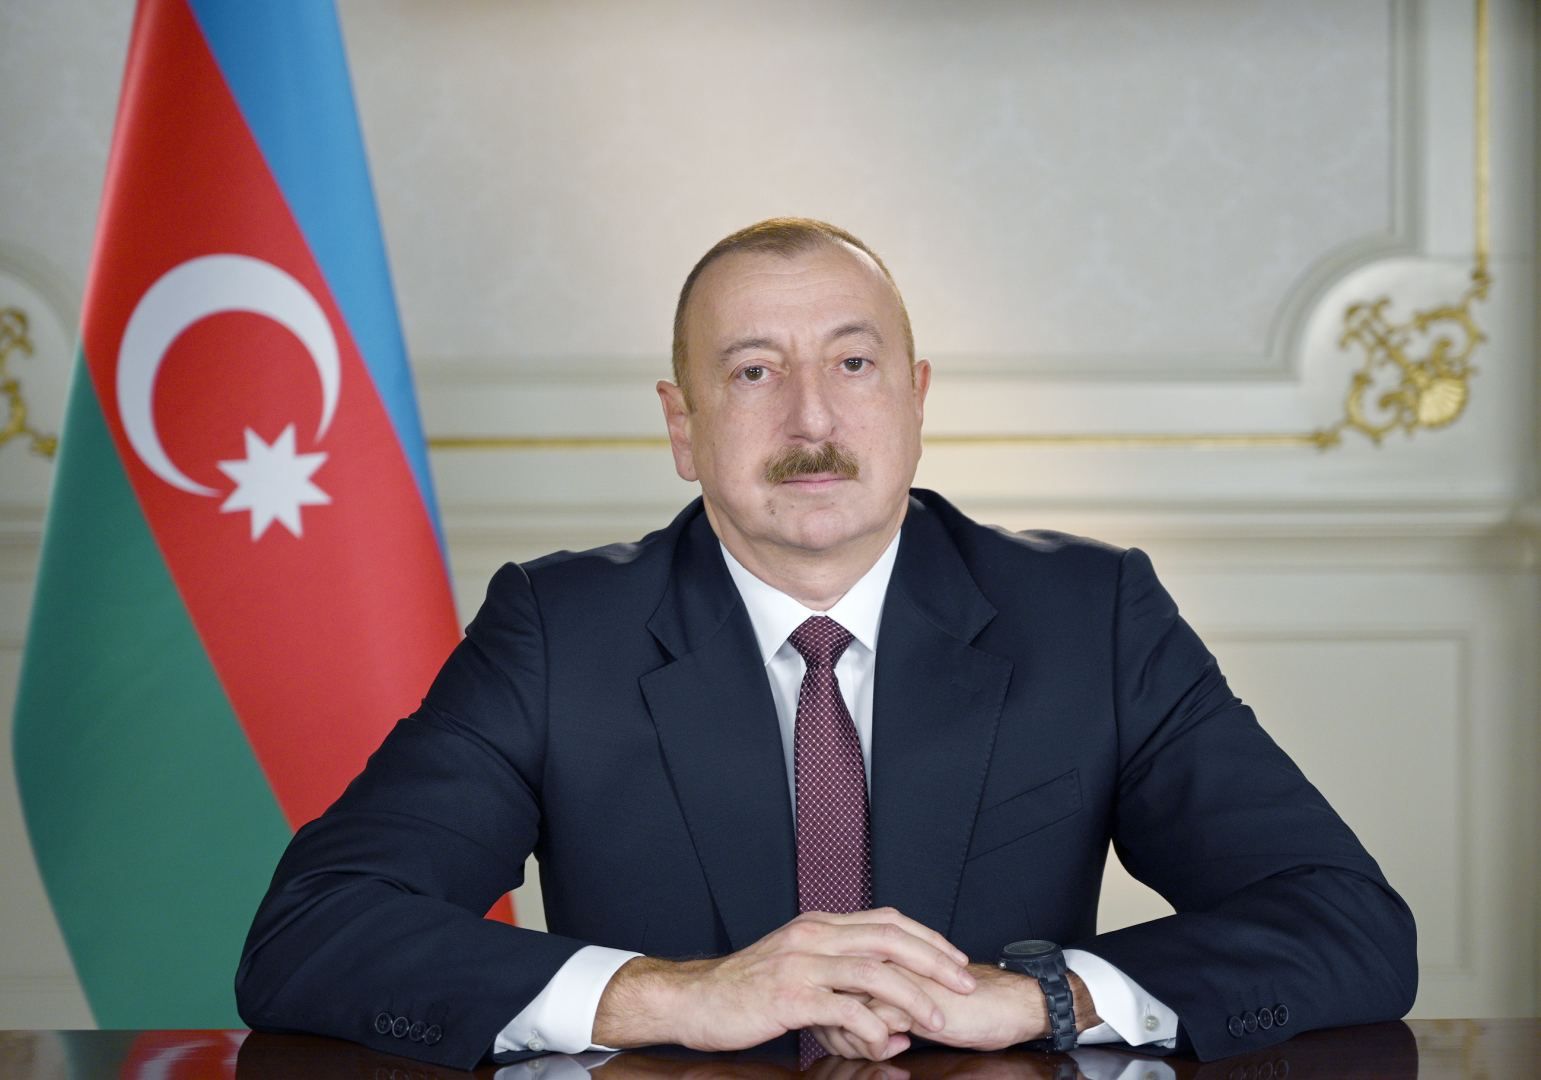 Azerbaijan allocates funds for construction, repair, restoration work in liberated Aghdam, Fuzuli, Khojavand, Tartar - decree